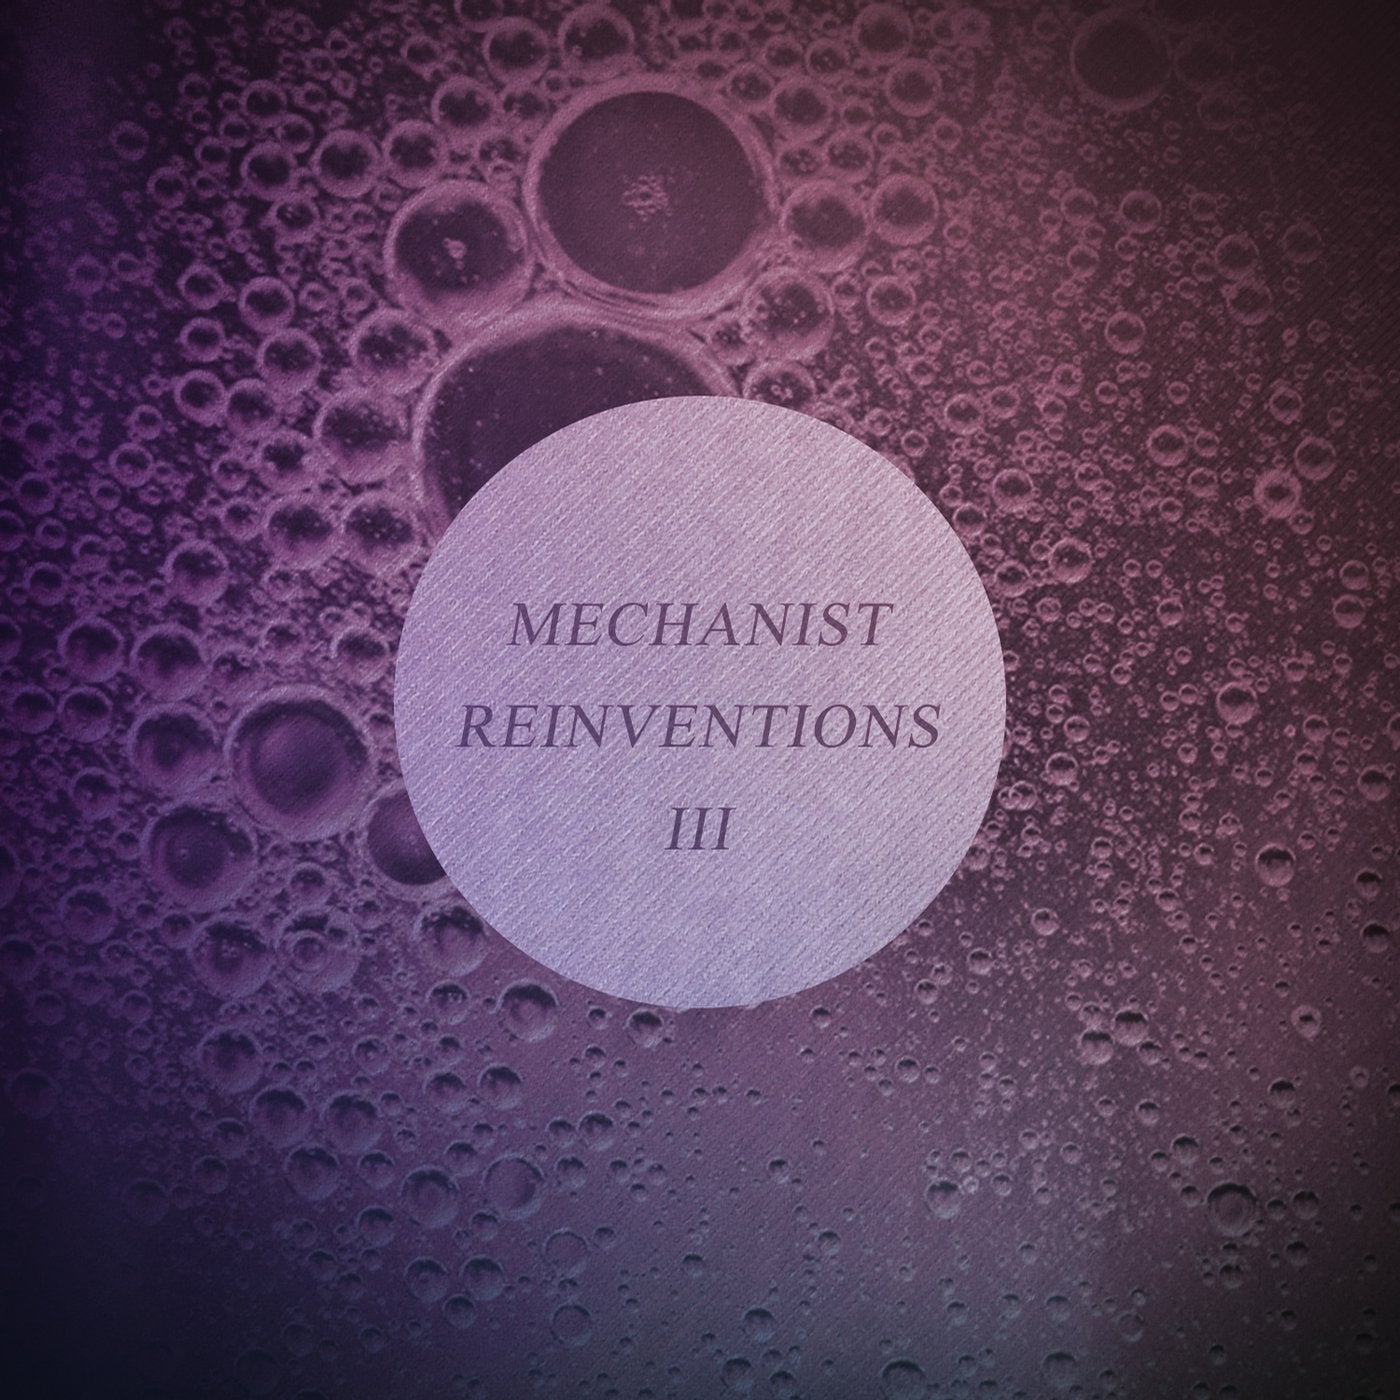 Reinventions III